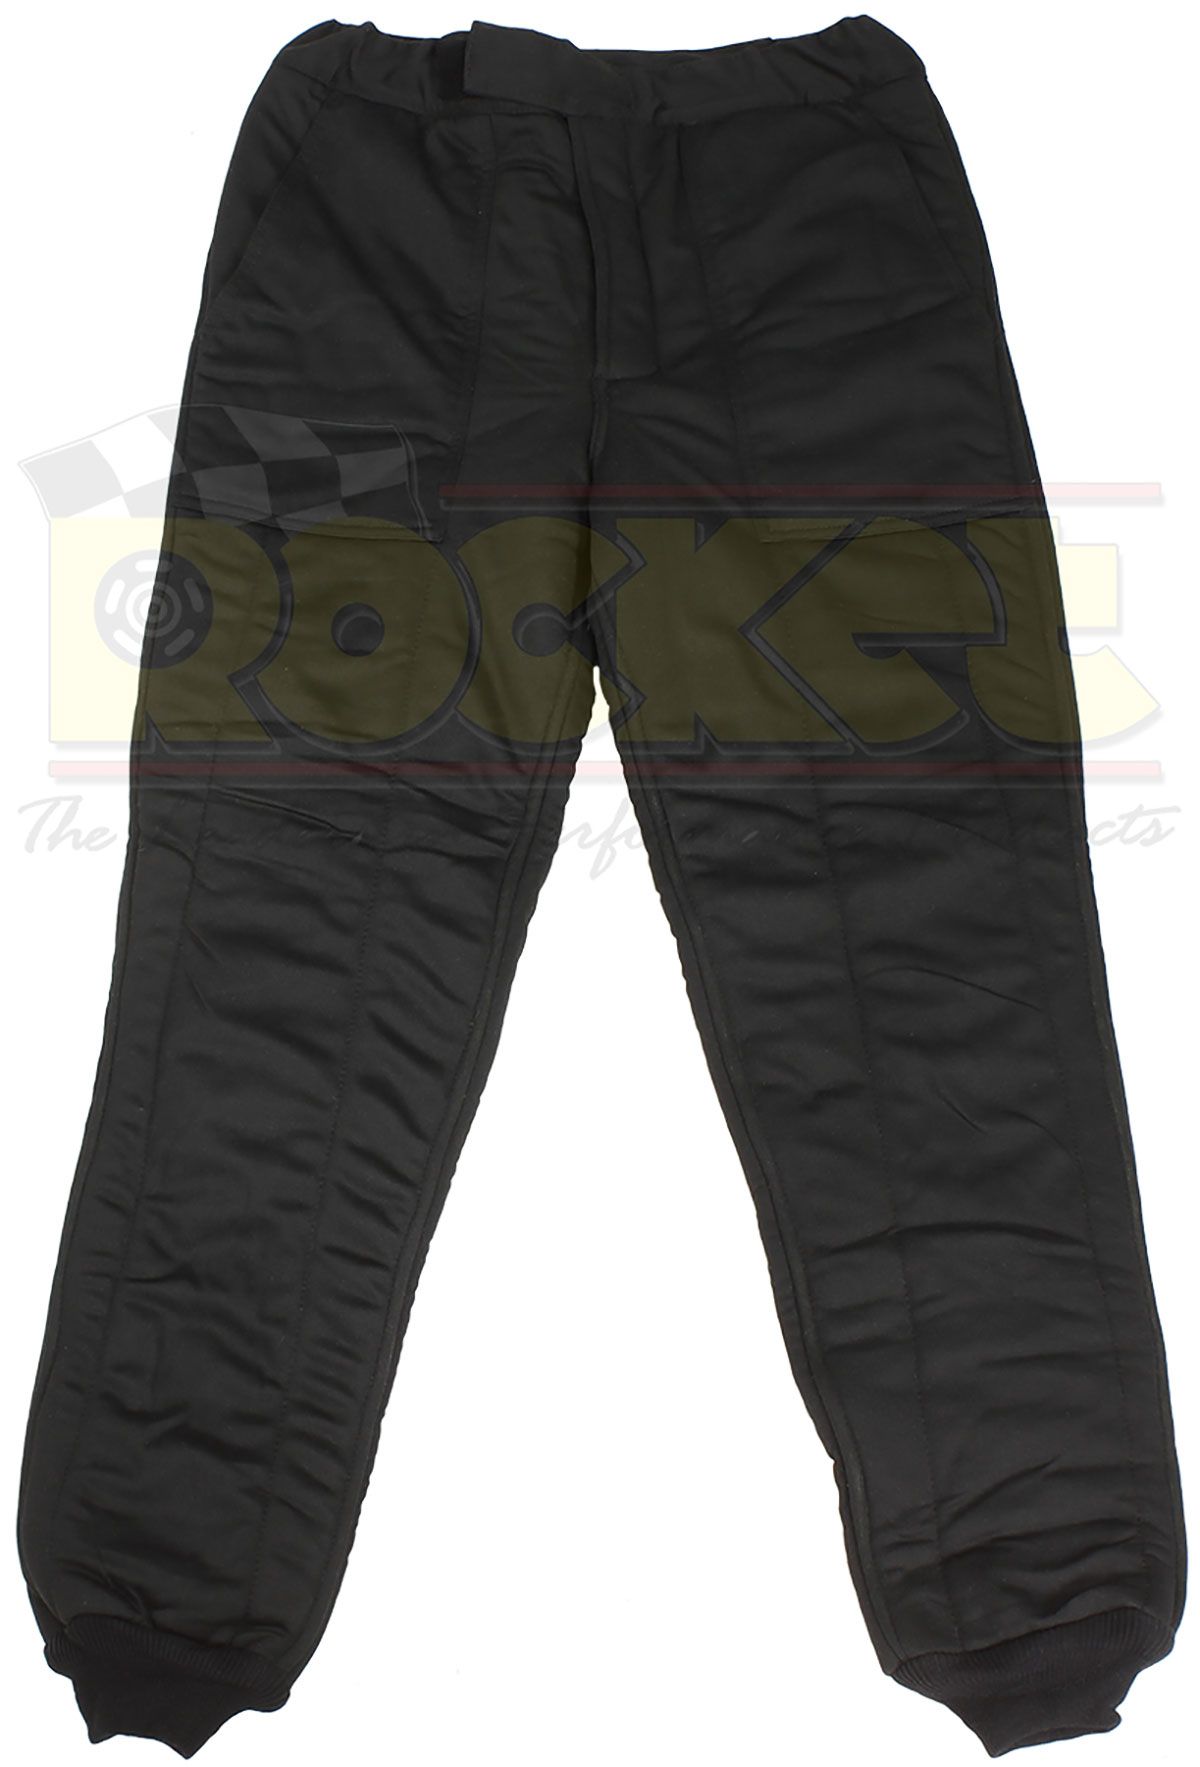 SI4802333 - SFI-20 BLACK PANTS LARGE